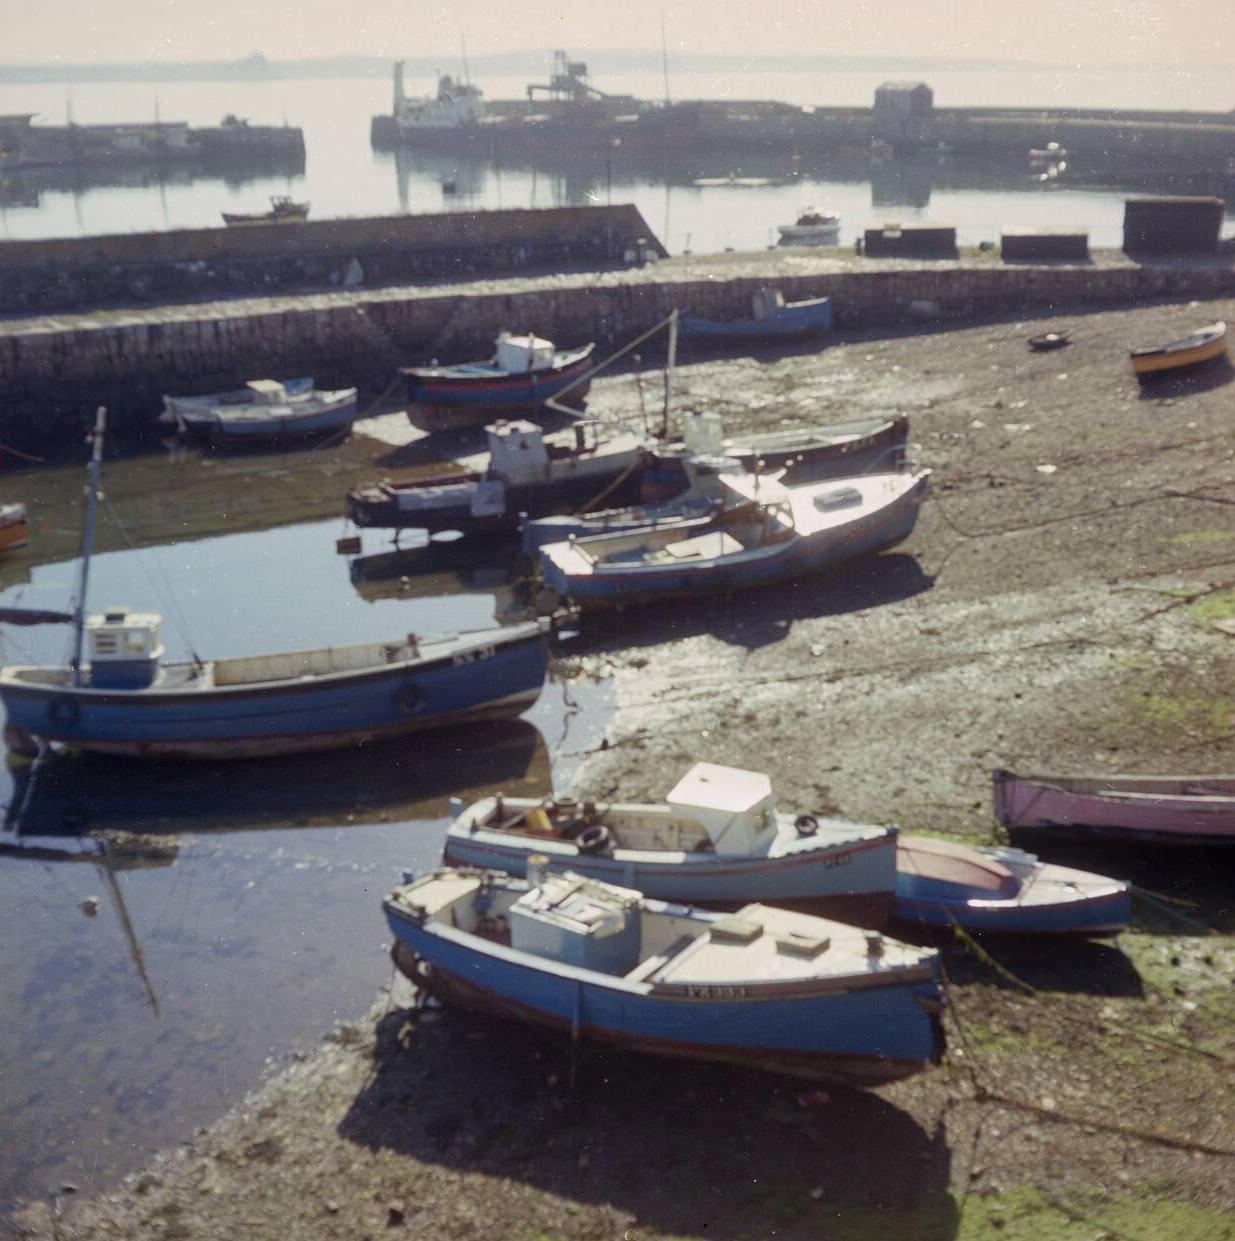 Penzance Harbour, Cornwall, 1967-1970.